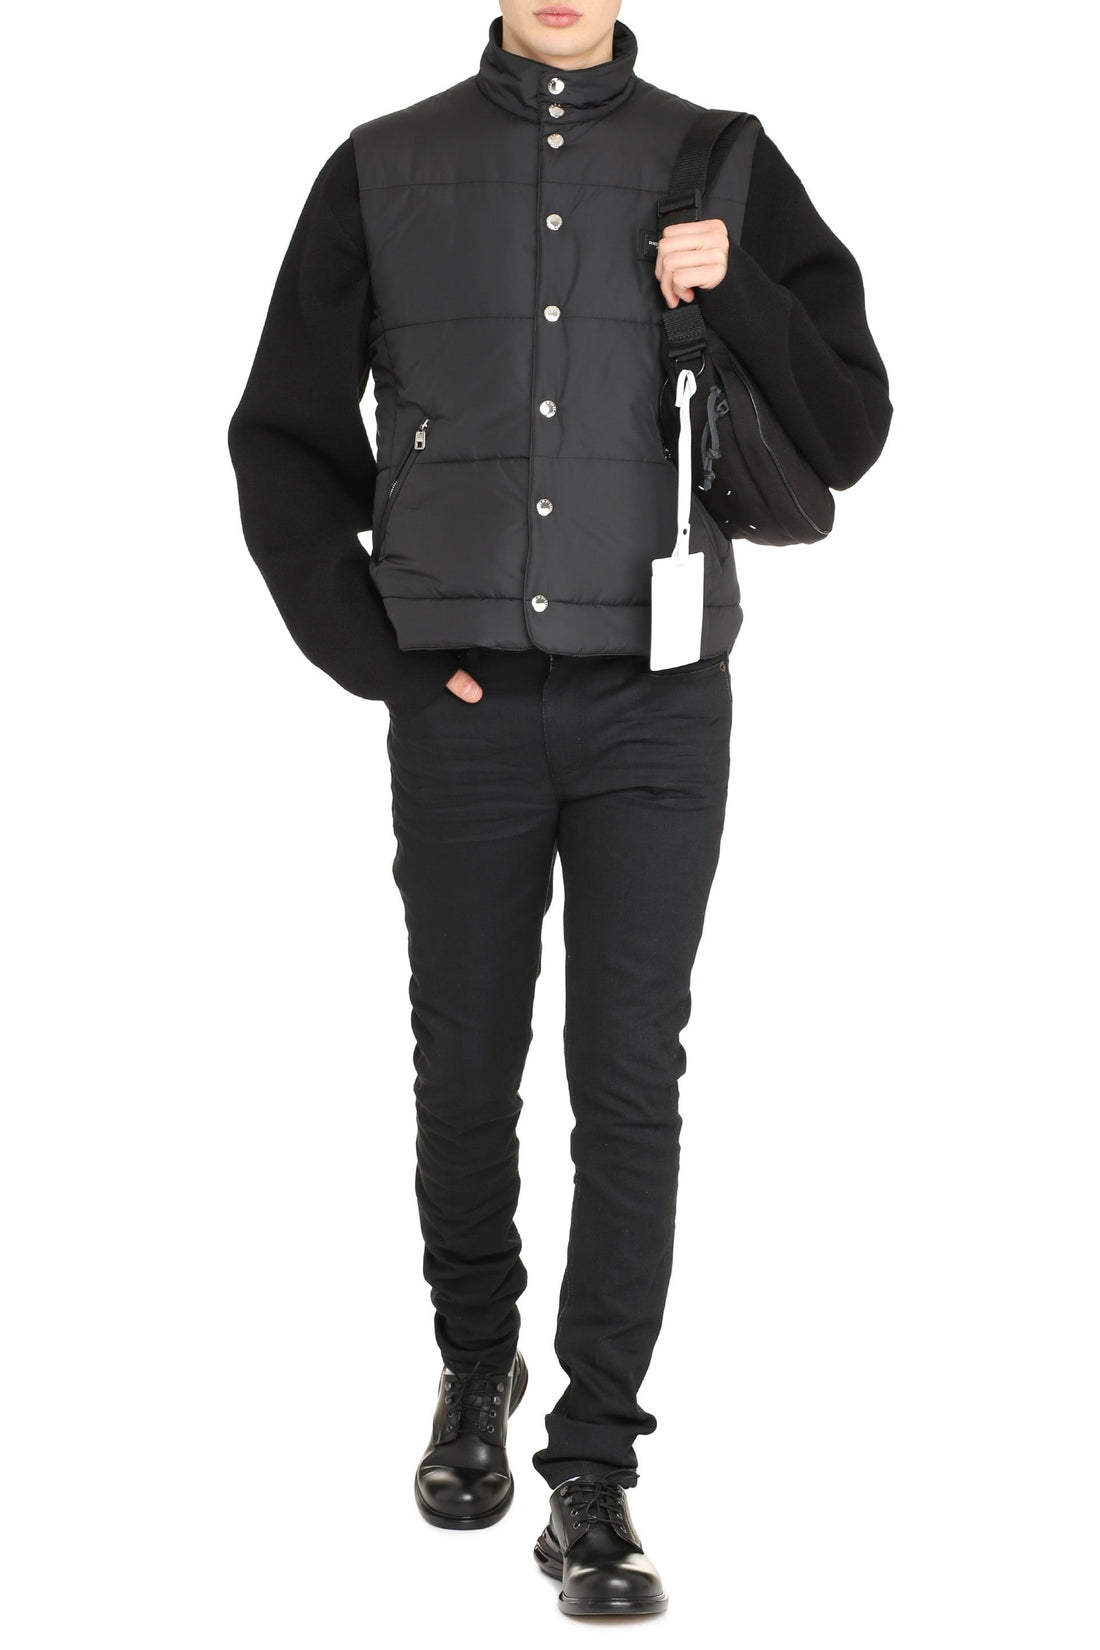 Dolce & Gabbana-OUTLET-SALE-Bodywarmer jacket-ARCHIVIST